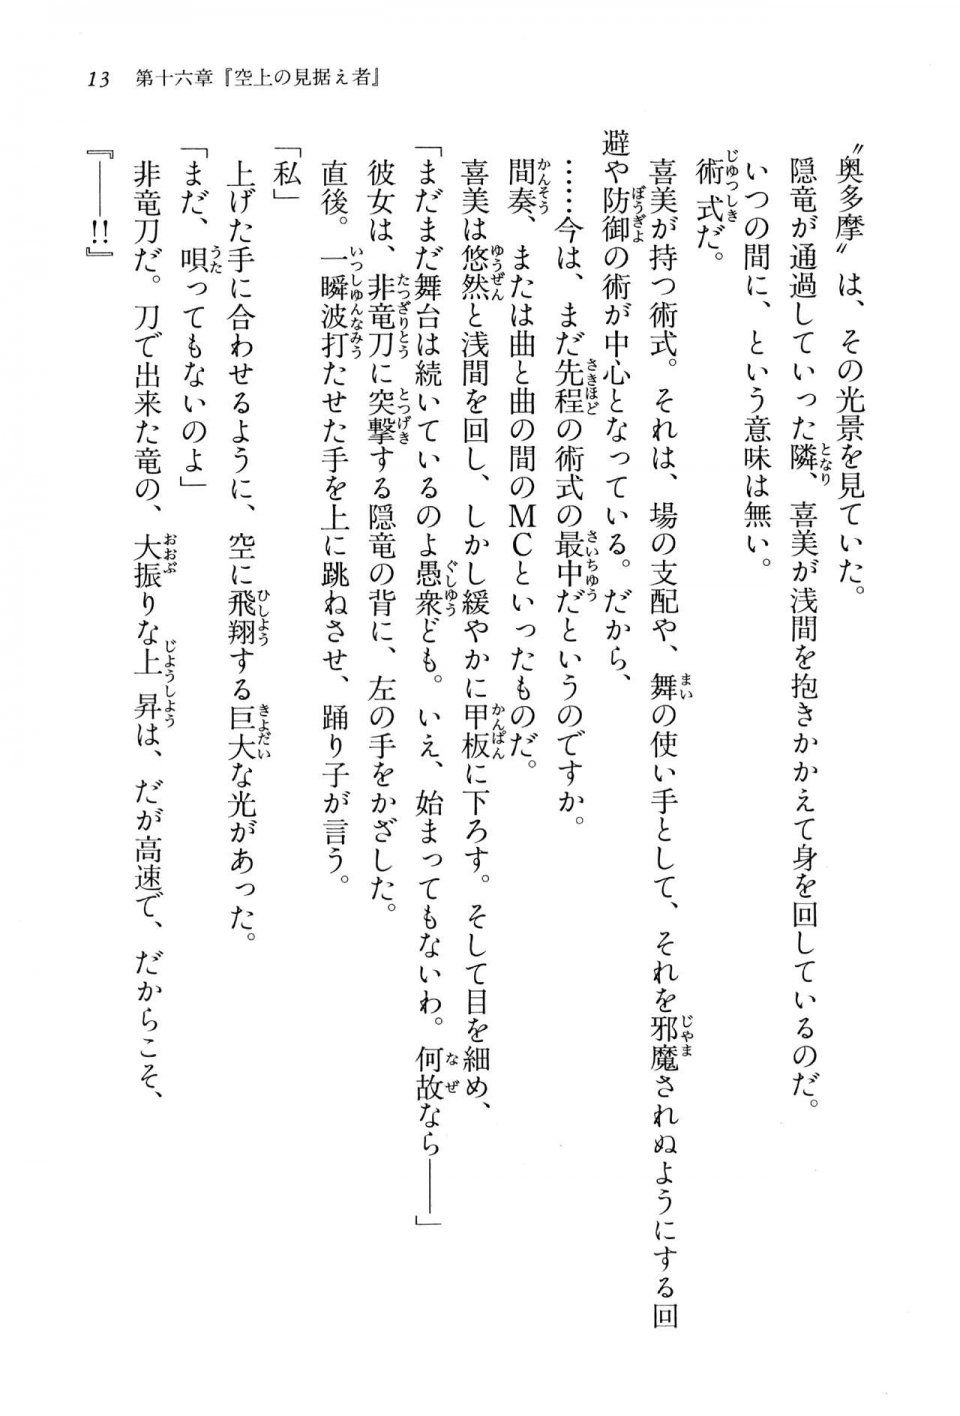 Kyoukai Senjou no Horizon BD Special Mininovel Vol 4(2B) - Photo #17